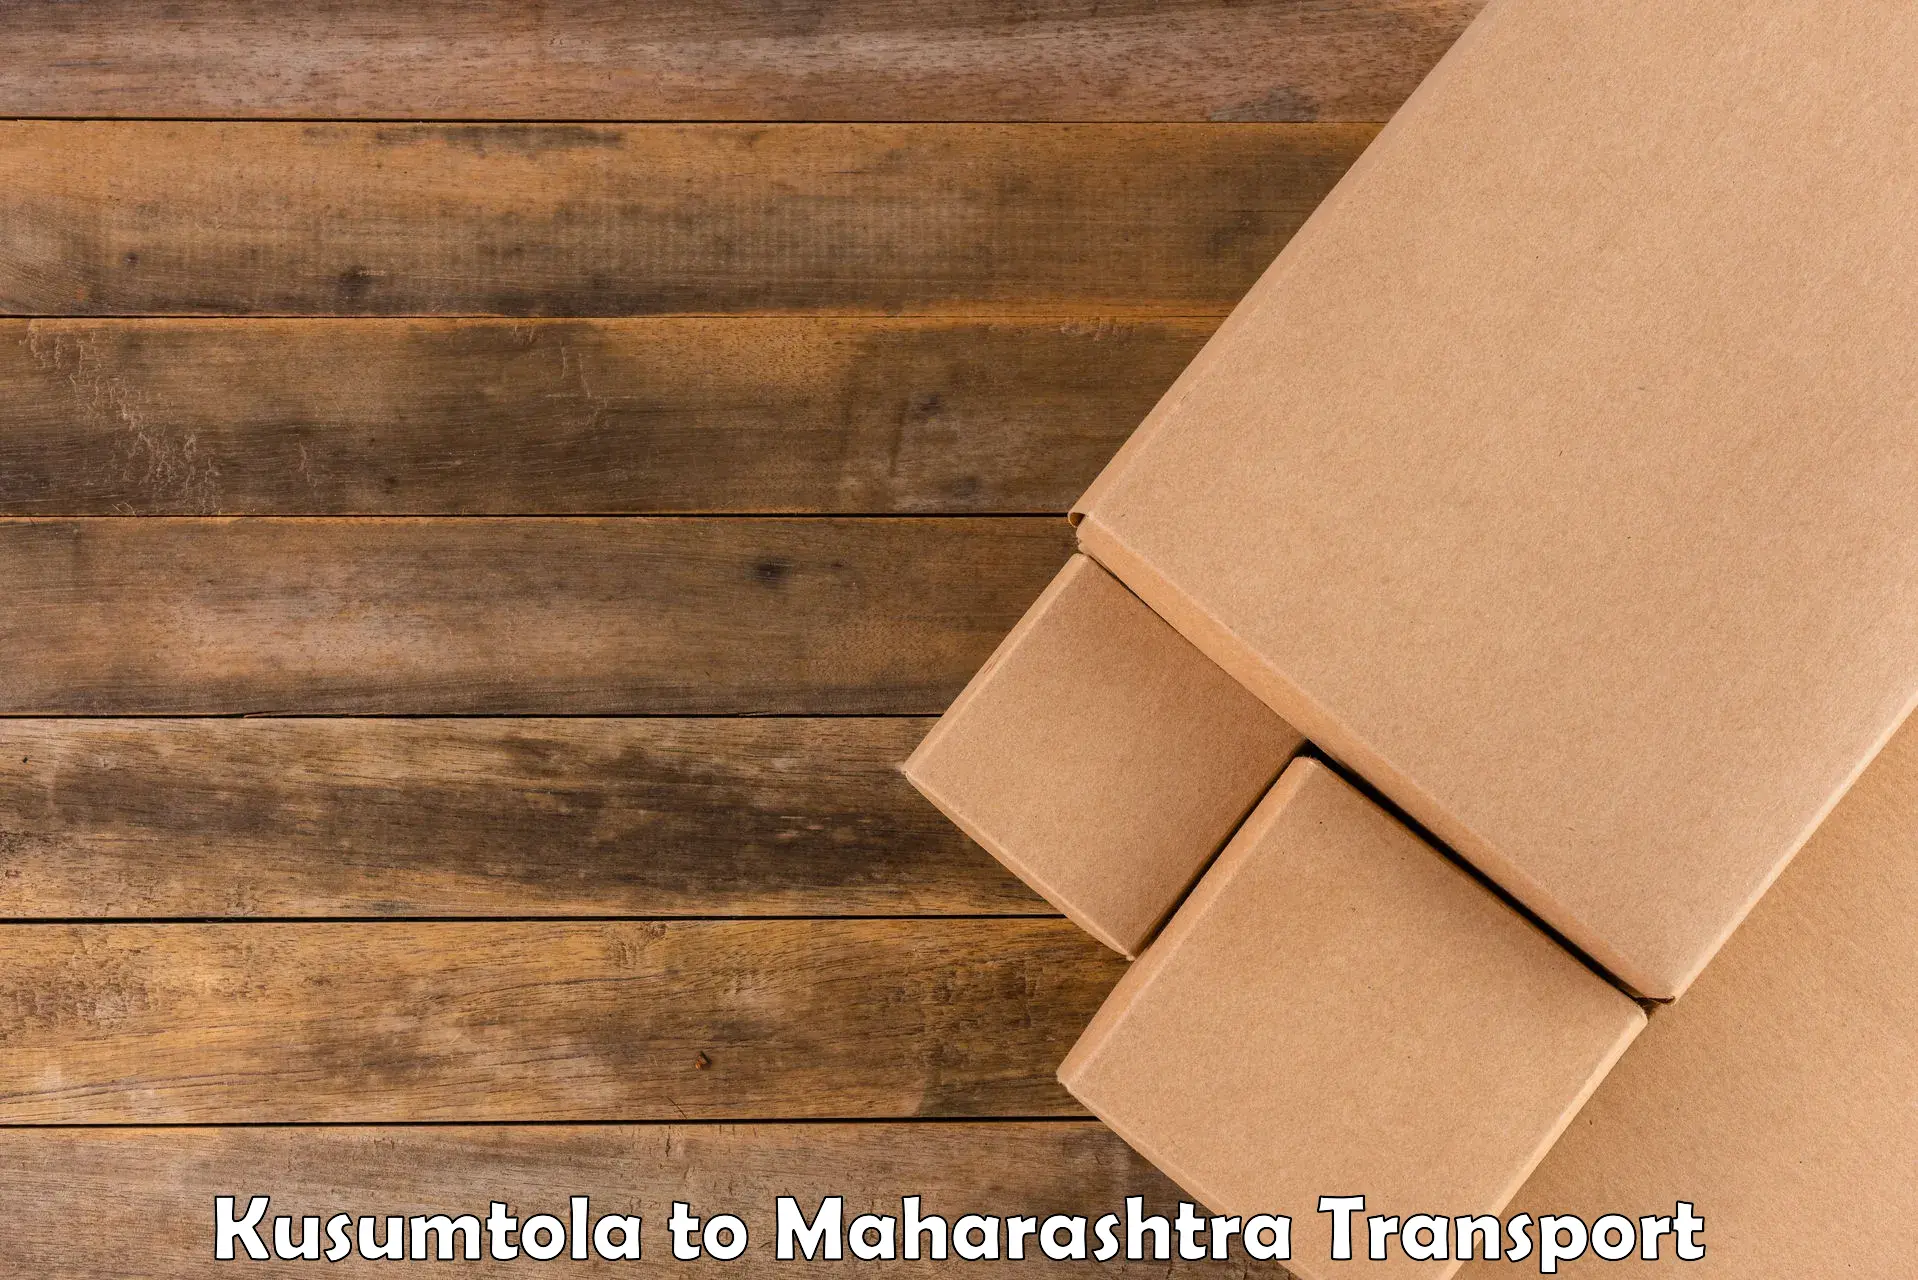 Truck transport companies in India Kusumtola to Pune